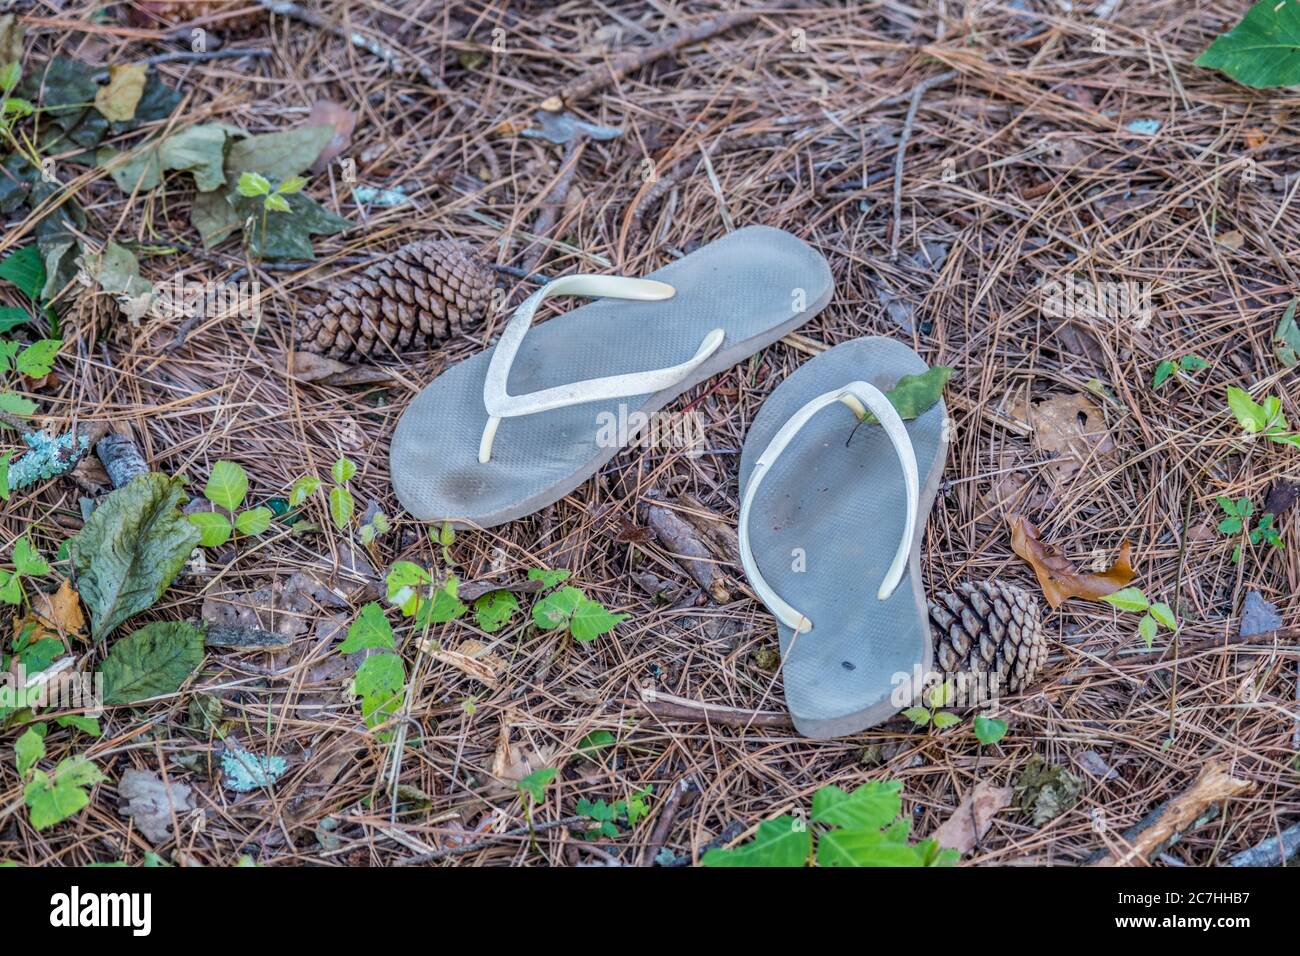 Flip-flops can be harmful when worn carelessly – The Denver Post